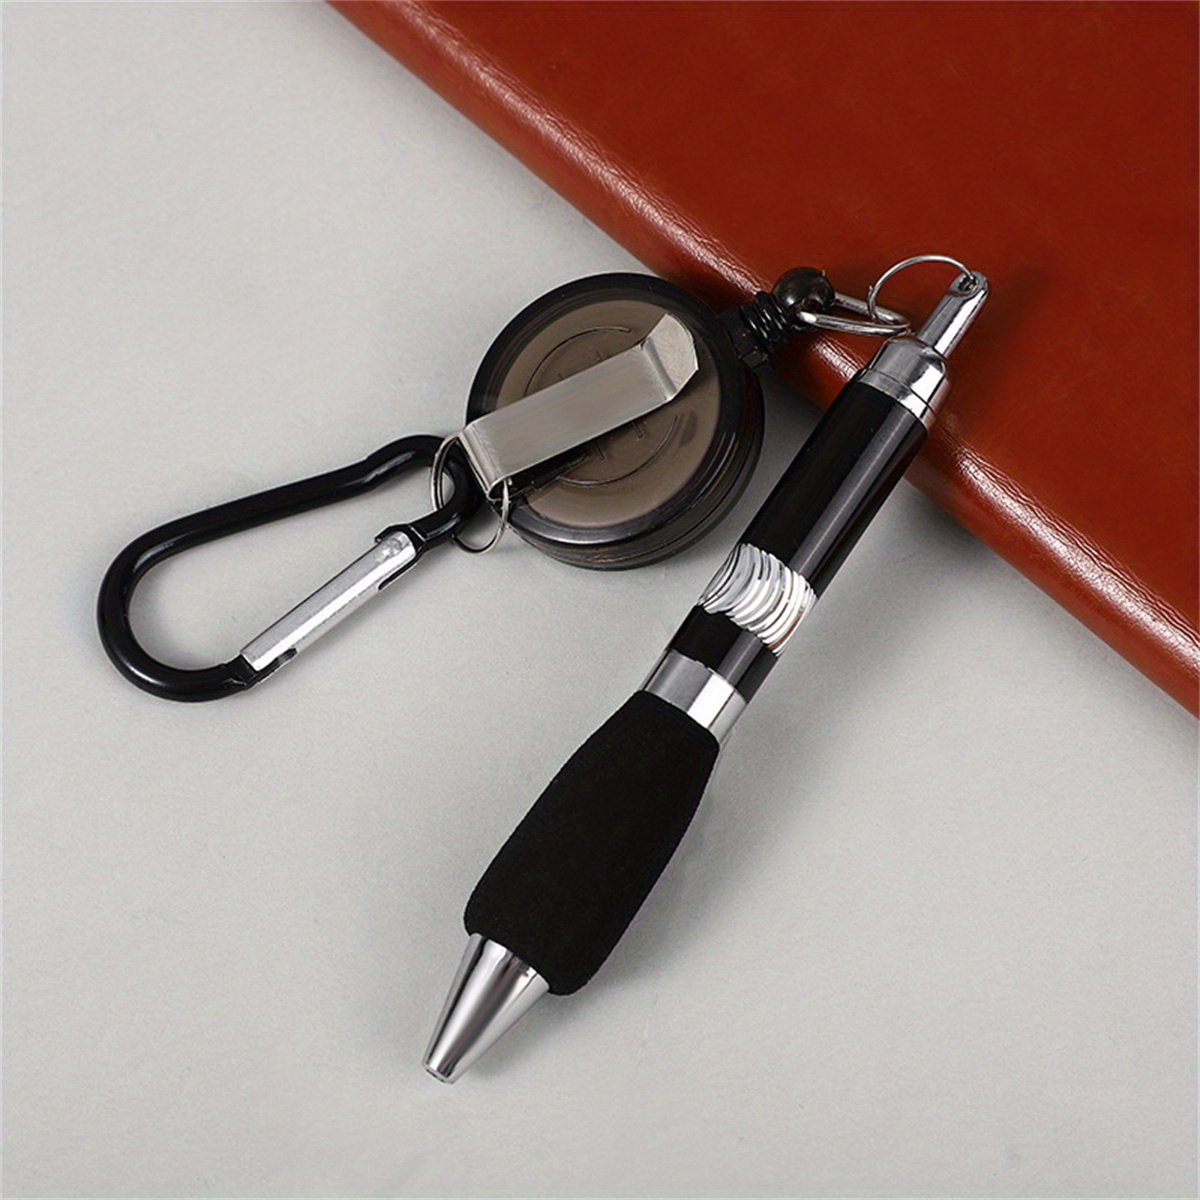 Mini Pen with Black Ink, Badge Reel Mini Clip on Pen black Ink, Badge Reel  Accessories, Medical ID Clip on Pen, Clip on Pen 